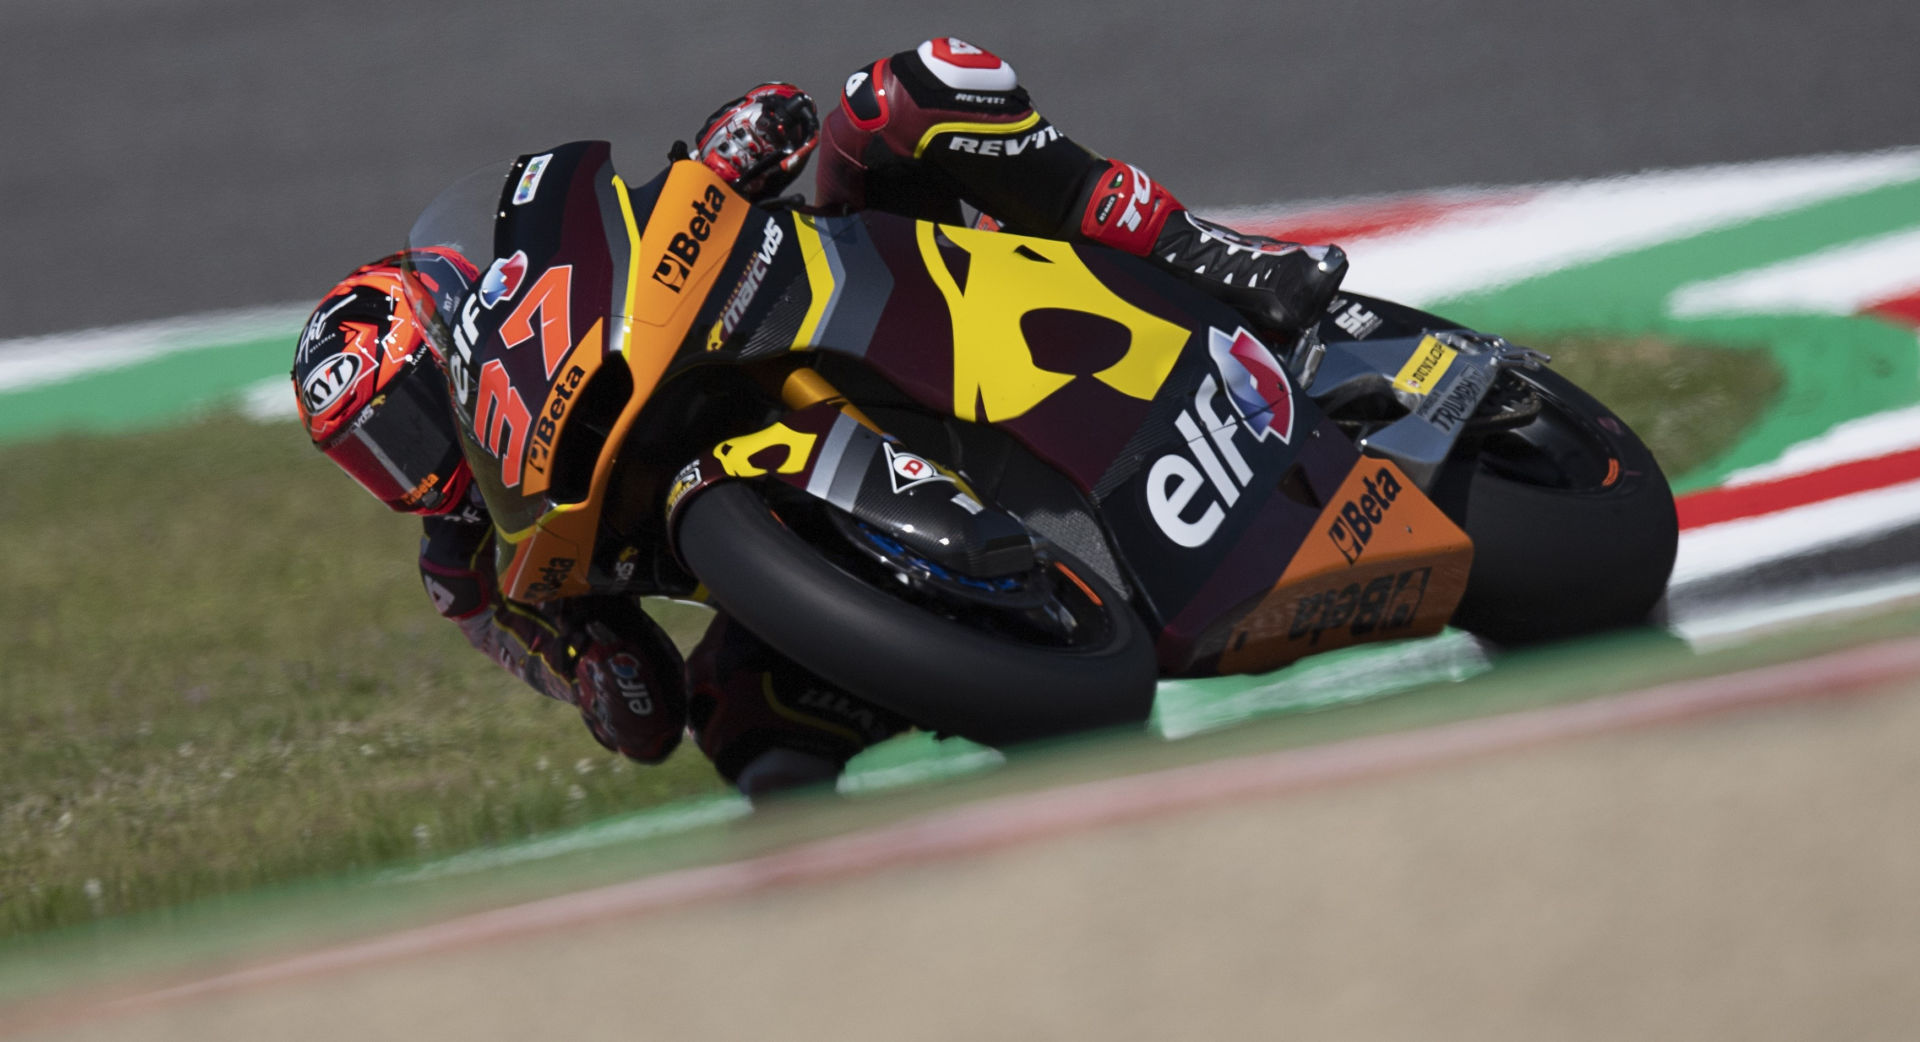 Moto2: Augusto Fastest In FP1 At Catalunya - Roadracing World Magazine | Motorcycle Riding, Racing & Tech News